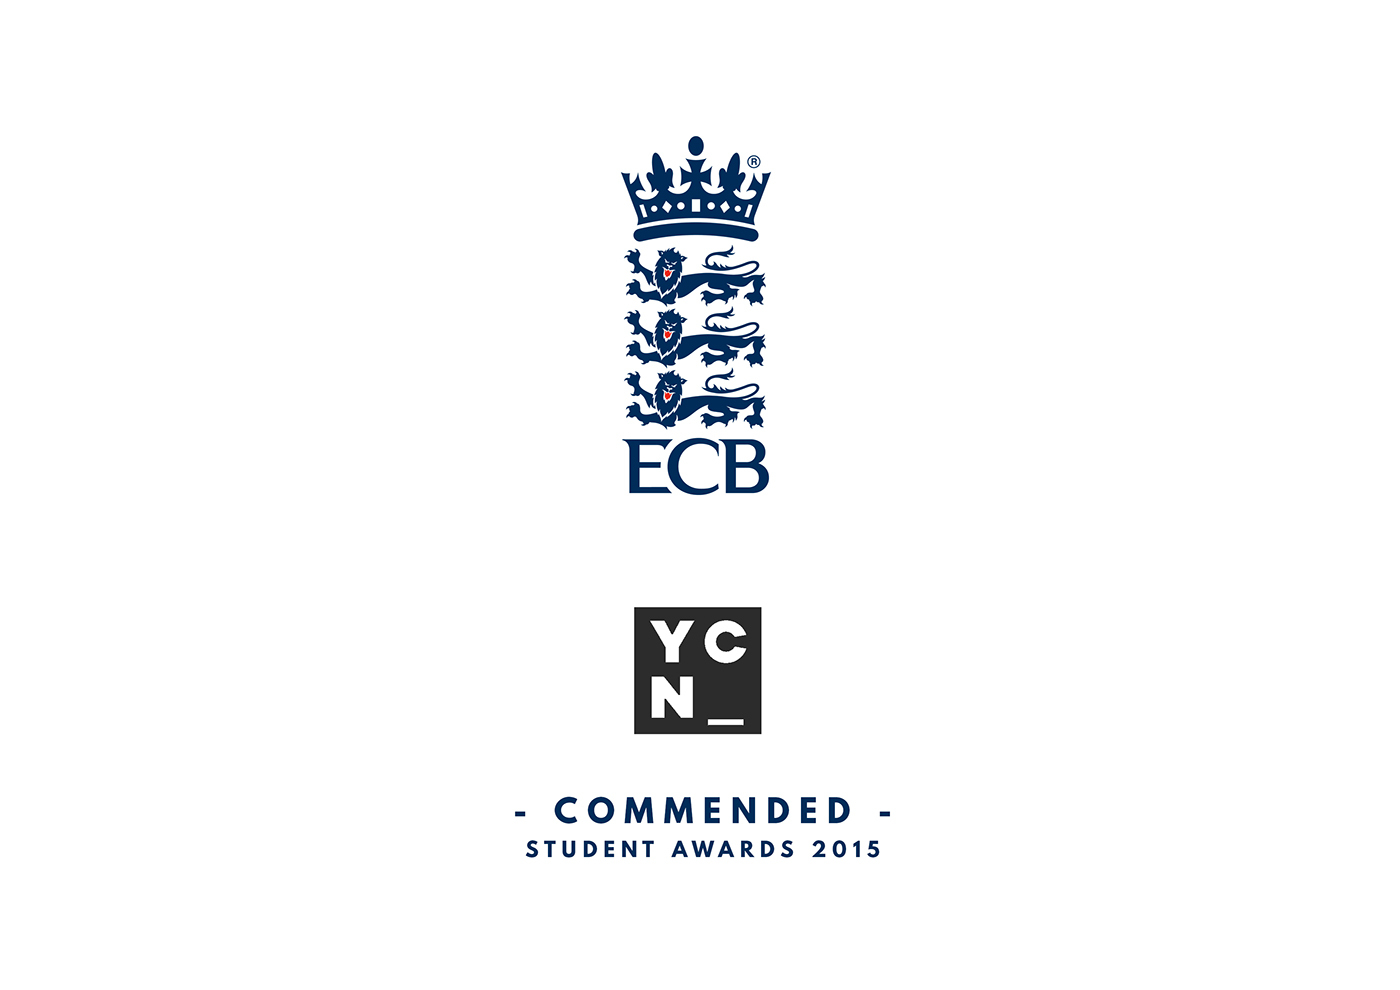 ecb Cricket laser ycn YCN 2015 English Cricket Board cricket bat etching design lettering hand drawn wood laser cutting England and Wales UK